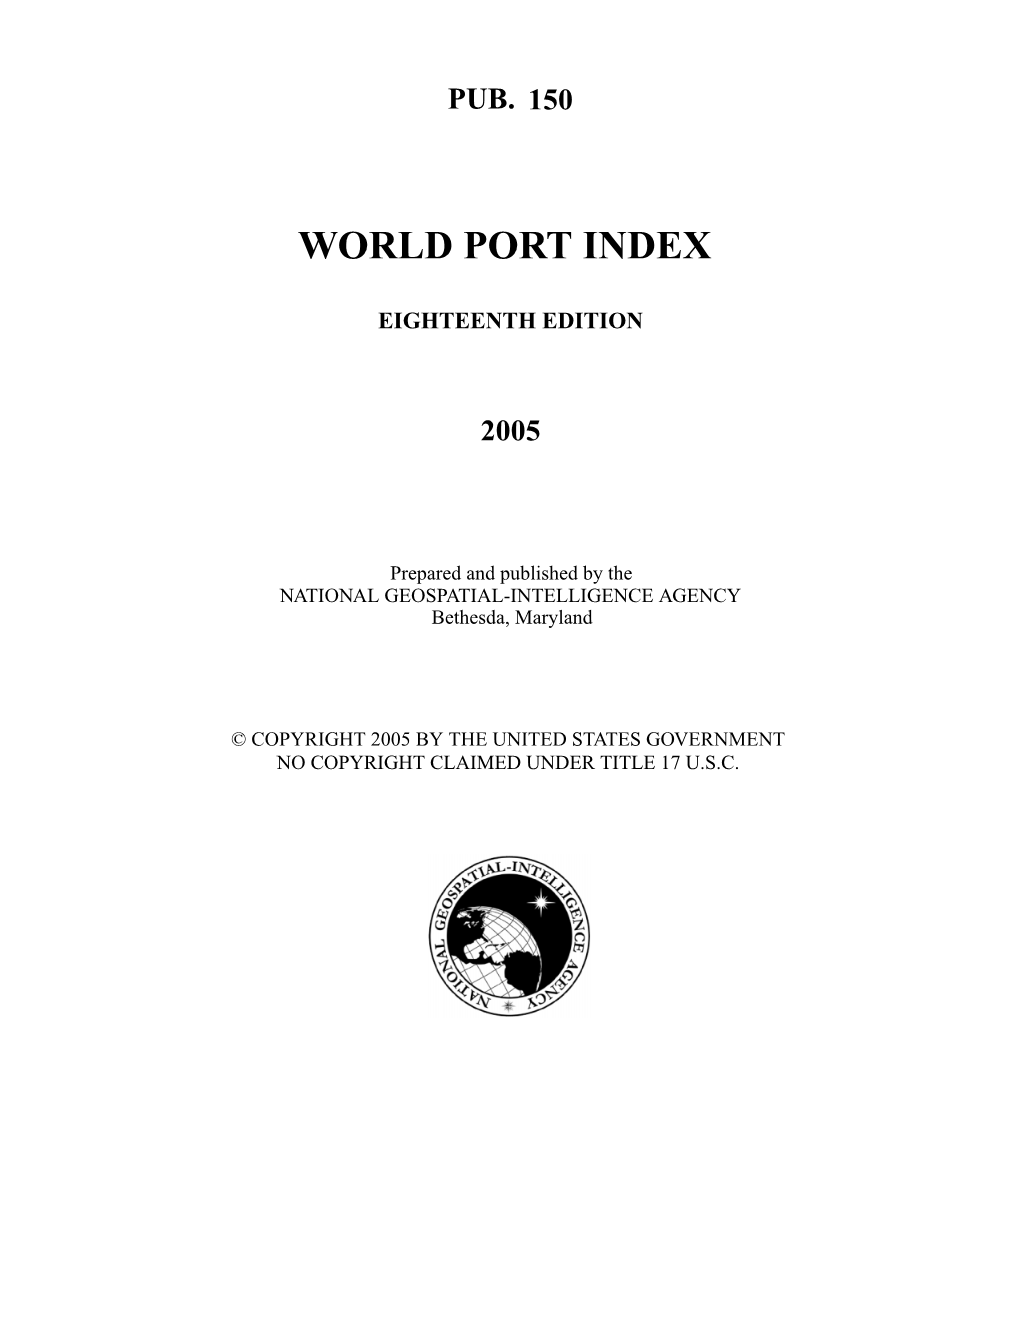 World Port Index